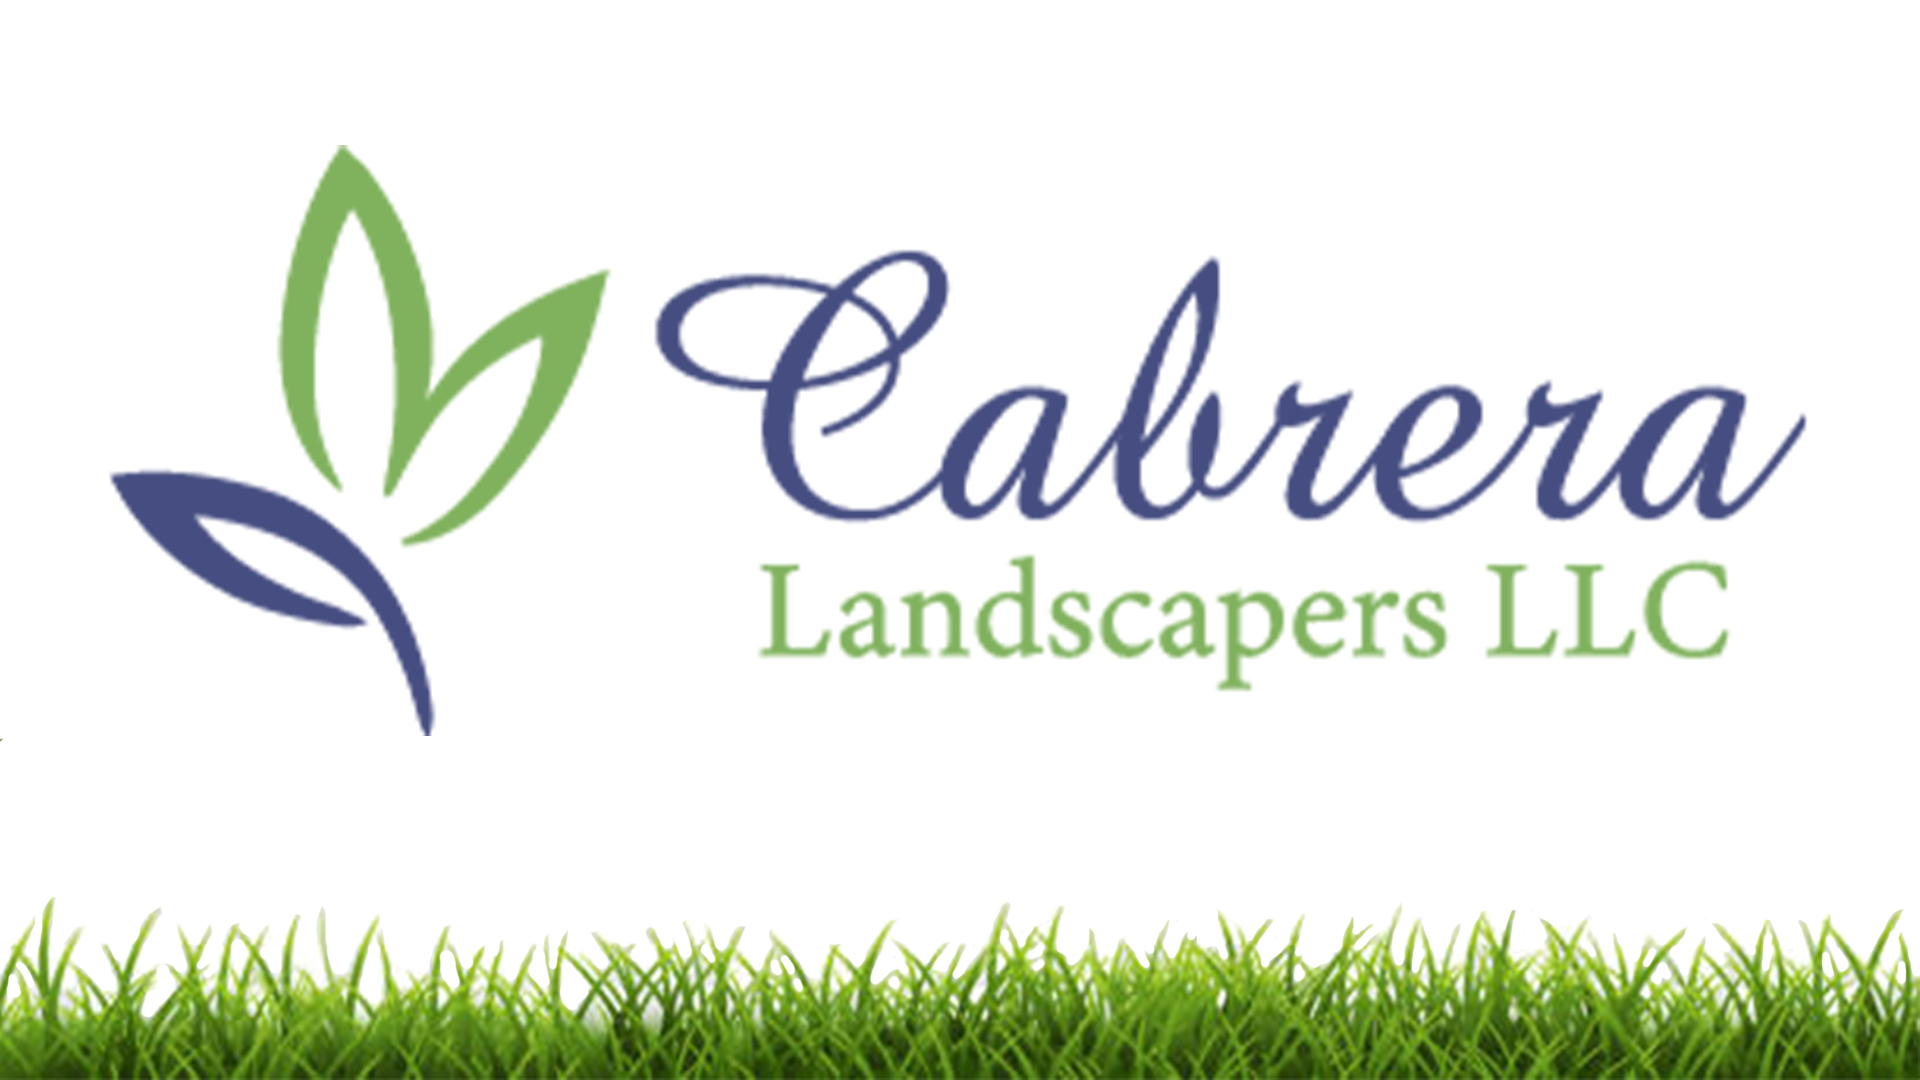 Cabreara-Landscapers-LLC